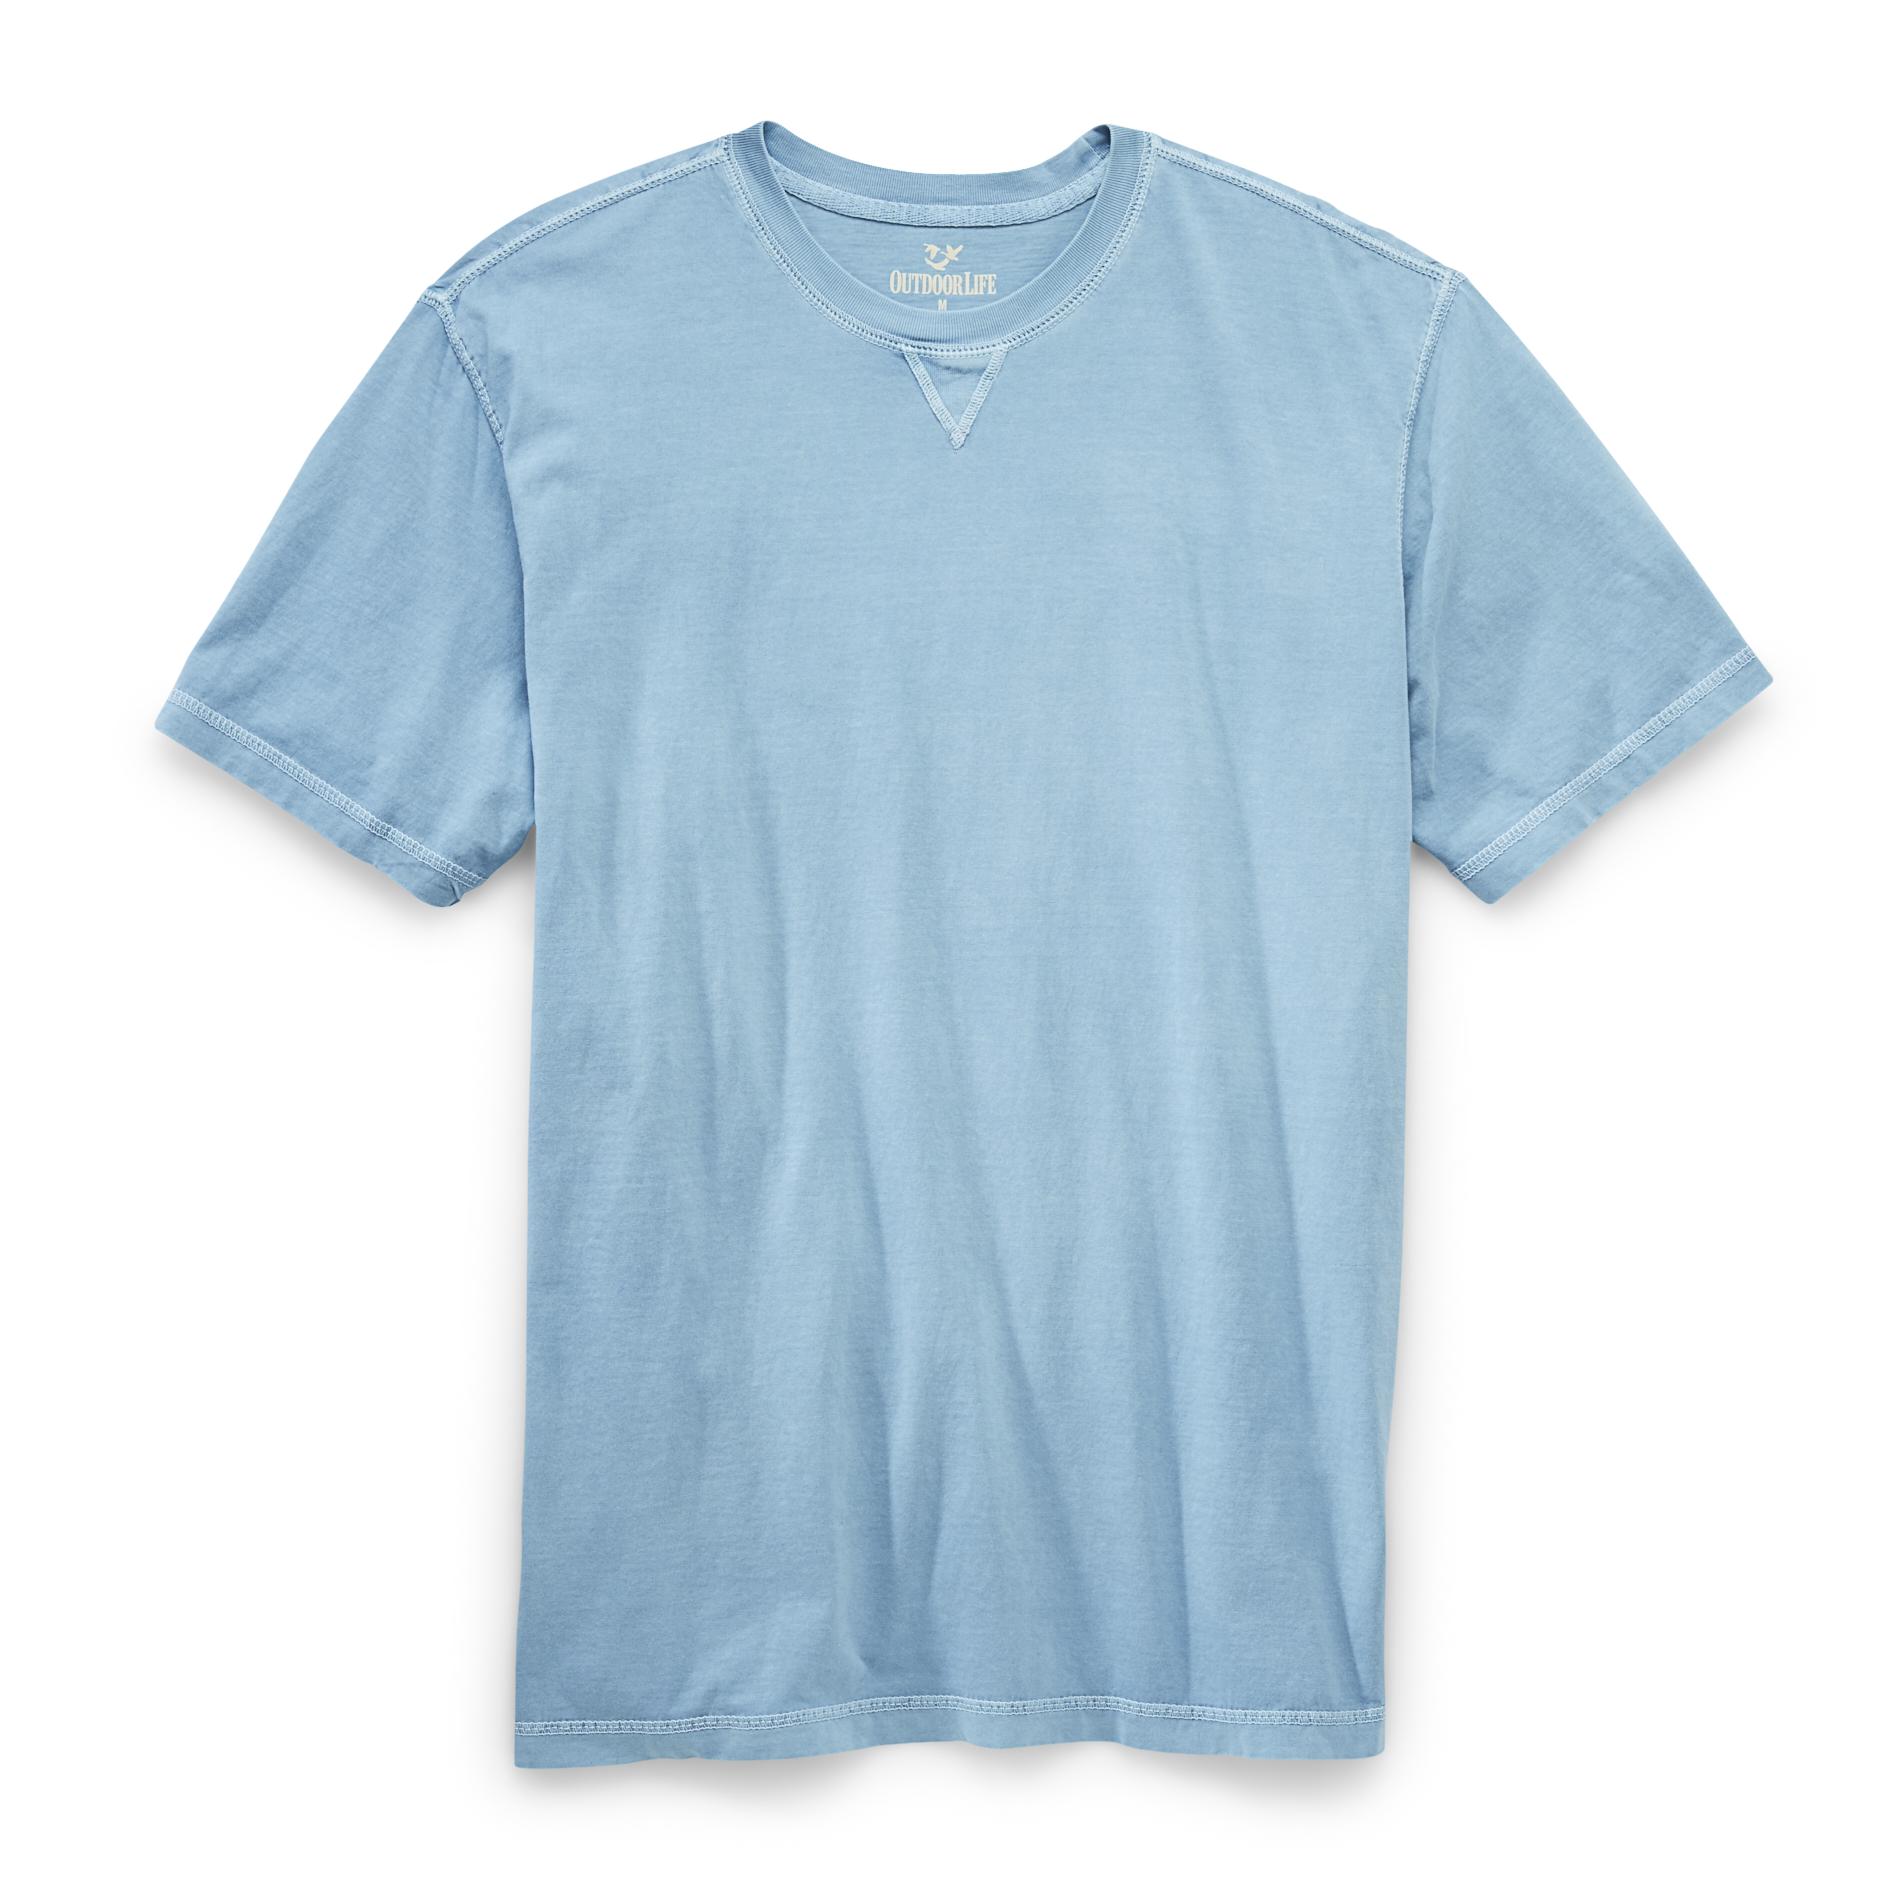 Outdoor Life Men's Big & Tall Short-Sleeve T-Shirt